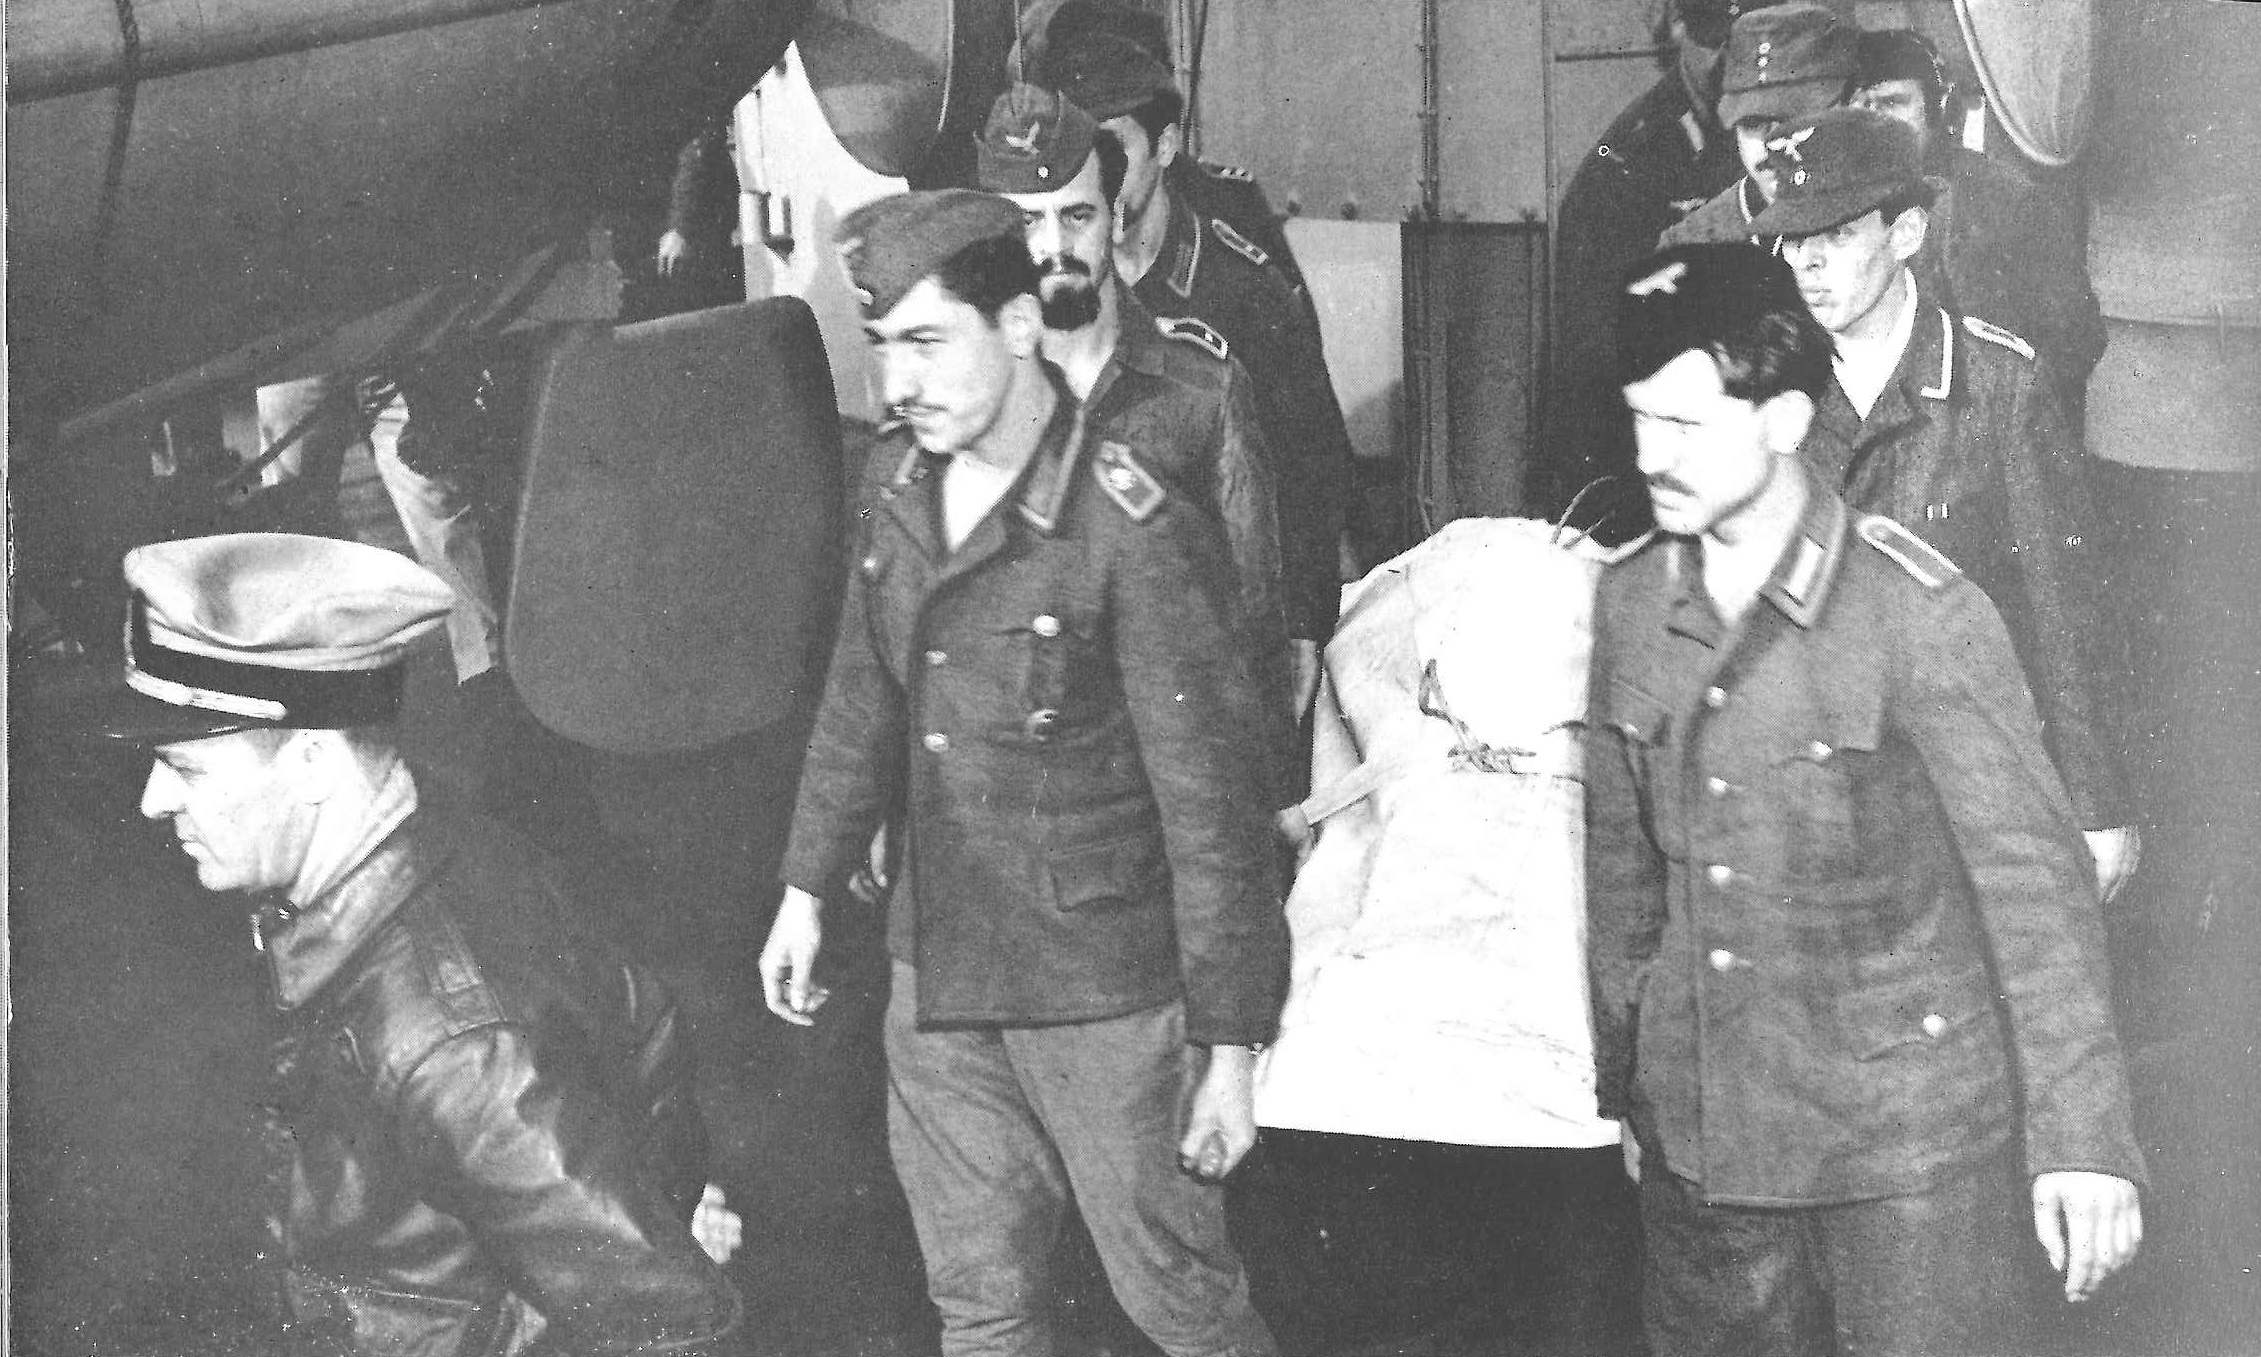 On board the Boston-bound Wakefield, German POWs bury at sea one of their deceased comrades. (U.S. Coast Guard)